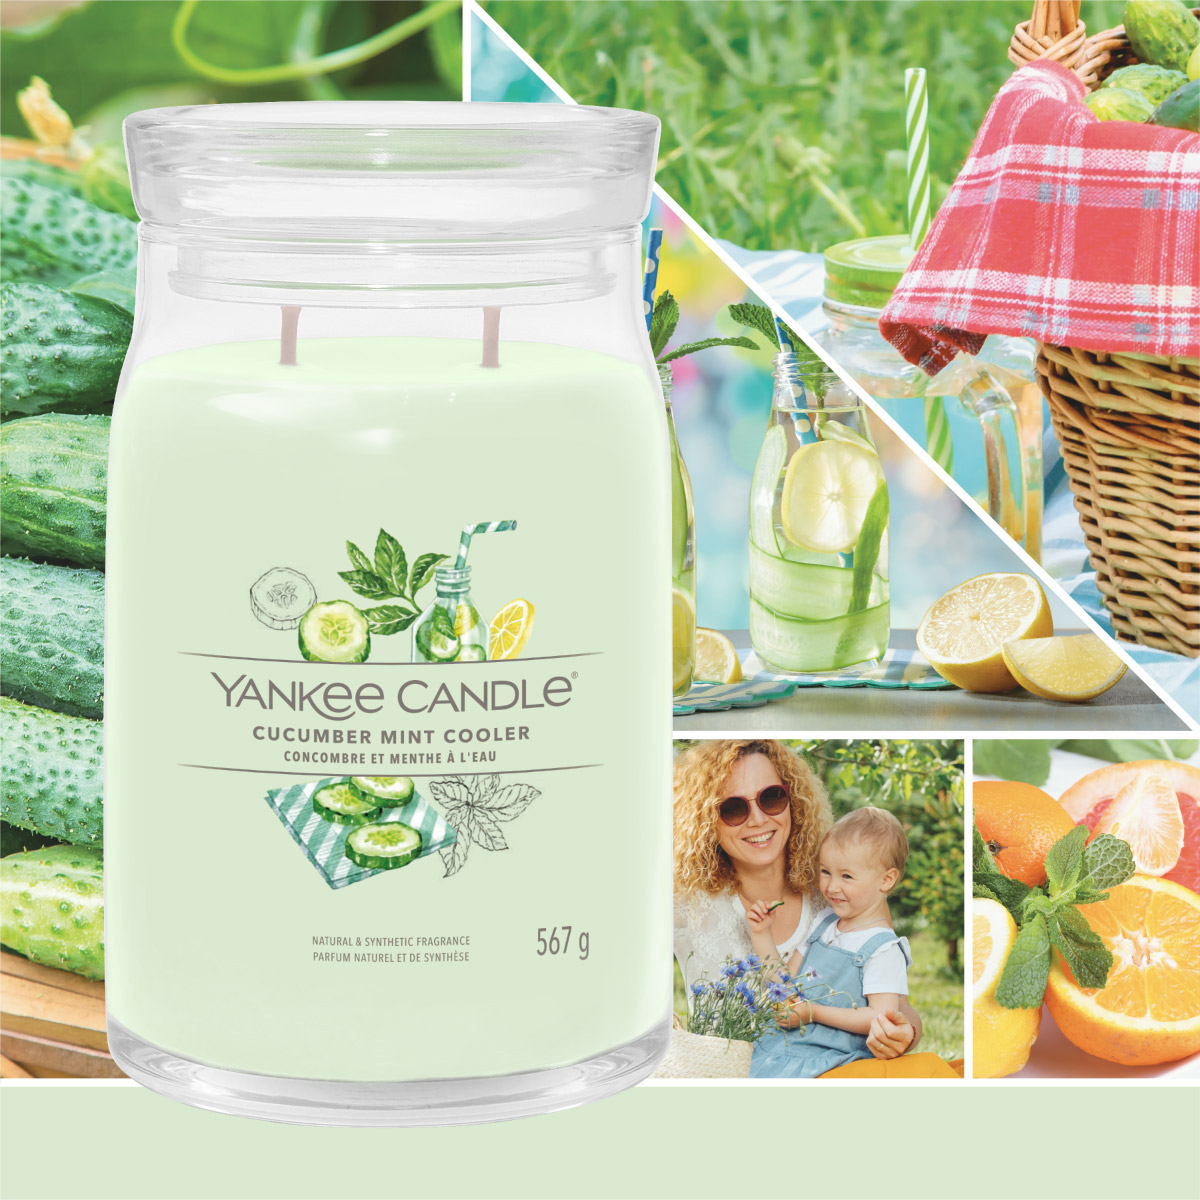 Cucumber Mint Cooler - Signature Duftkerze im Glas 567g - Yankee Candle®